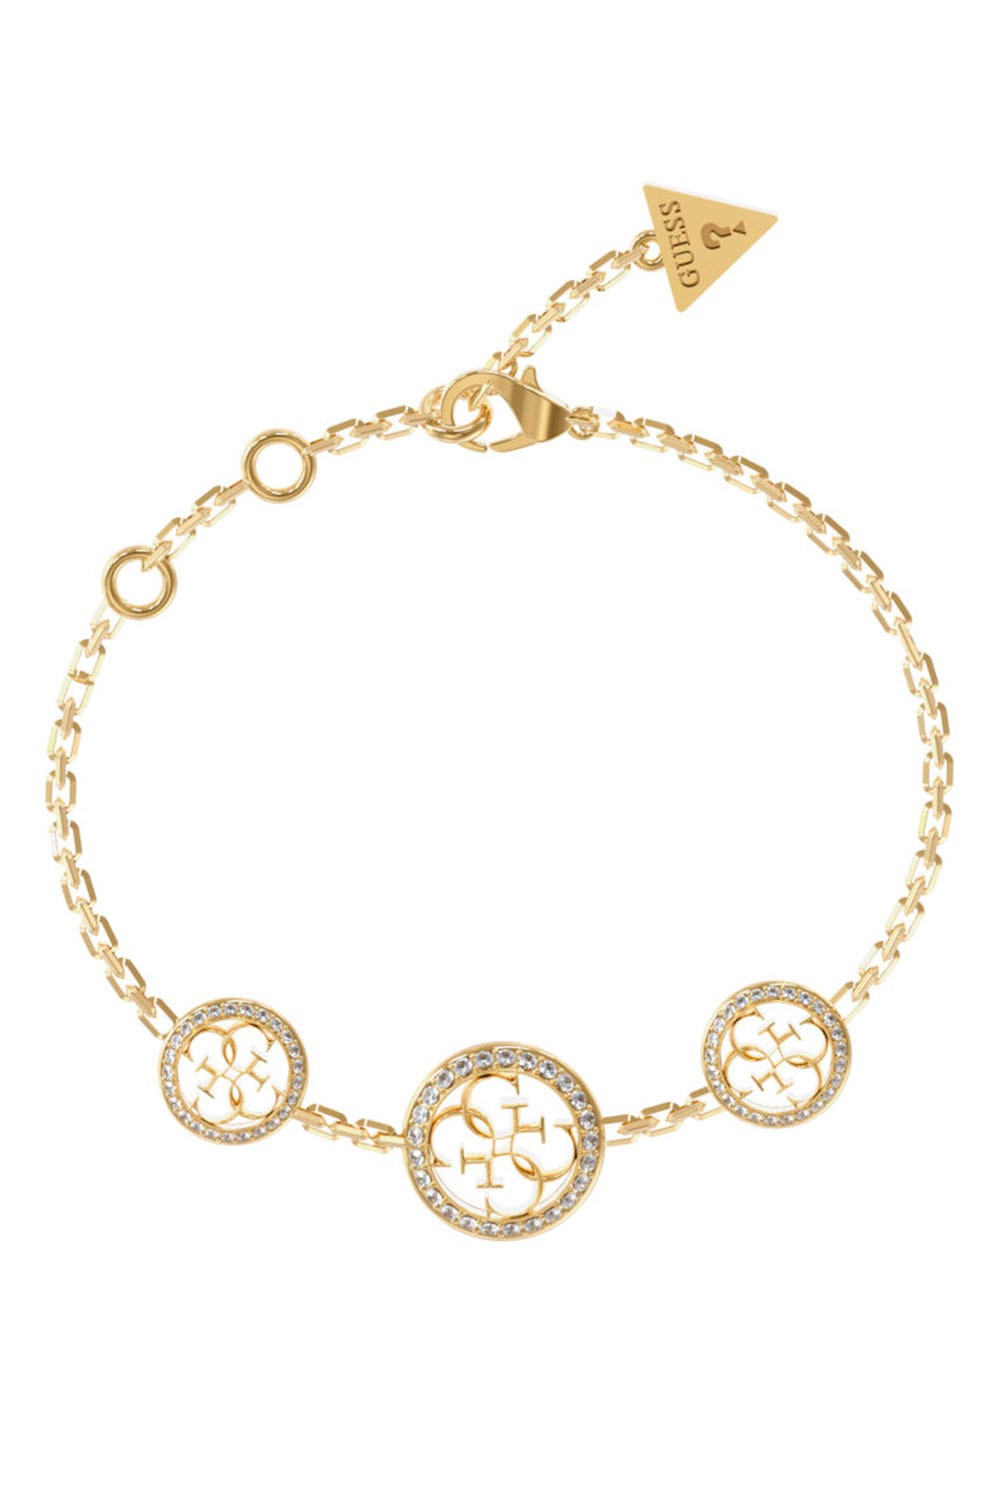 Bracelet GUESS Summer Toggle Chain Logo Heart Link Charm Bracelet NEW |  Charm bracelet, Chain, Toggle bracelet